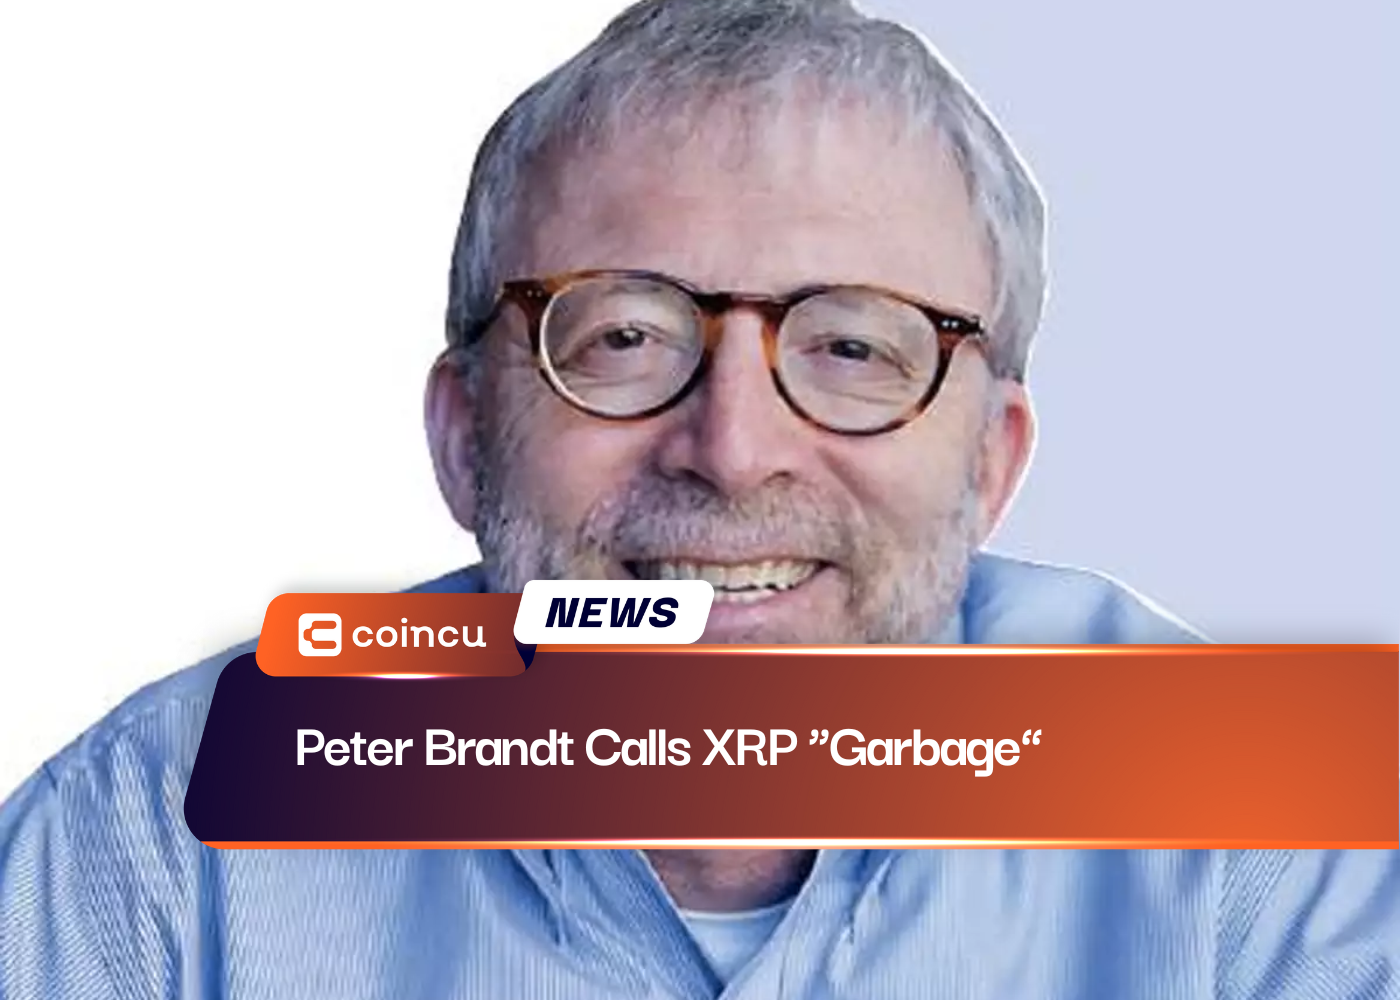 Peter Brandt Calls XRP “Garbage”